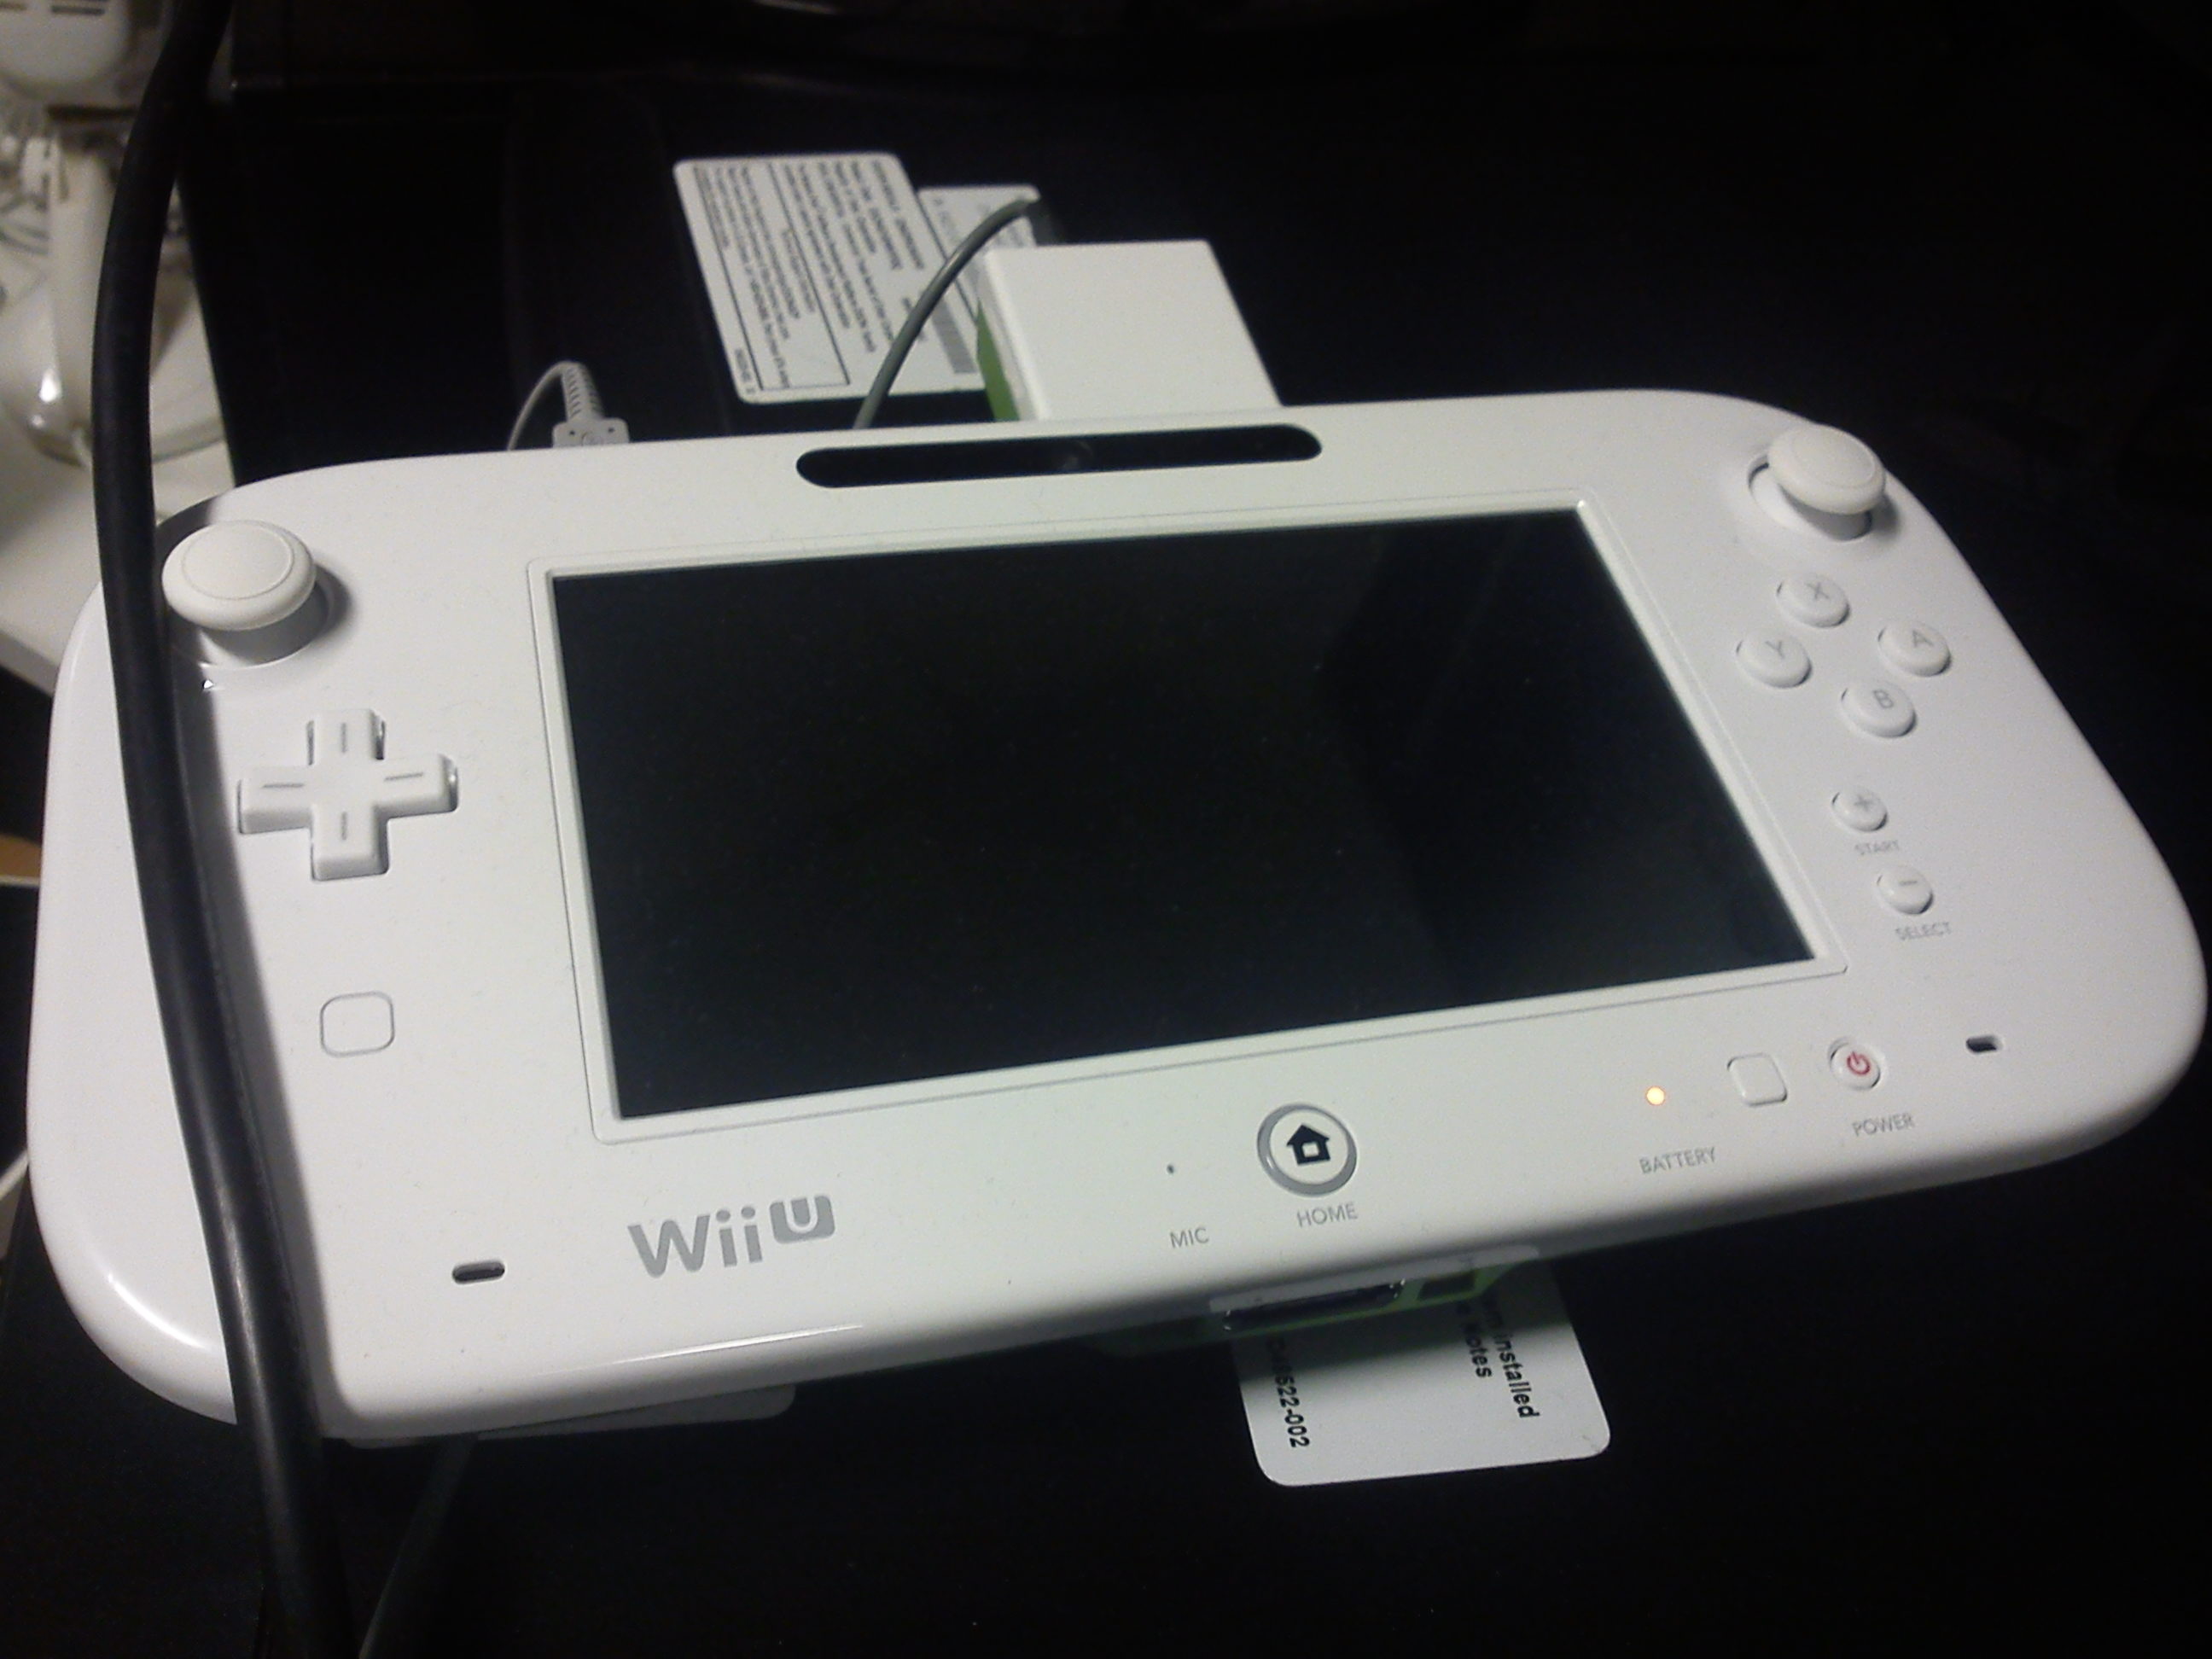 QA Tweets Photo Of Revised Wii U Controller - My Nintendo News